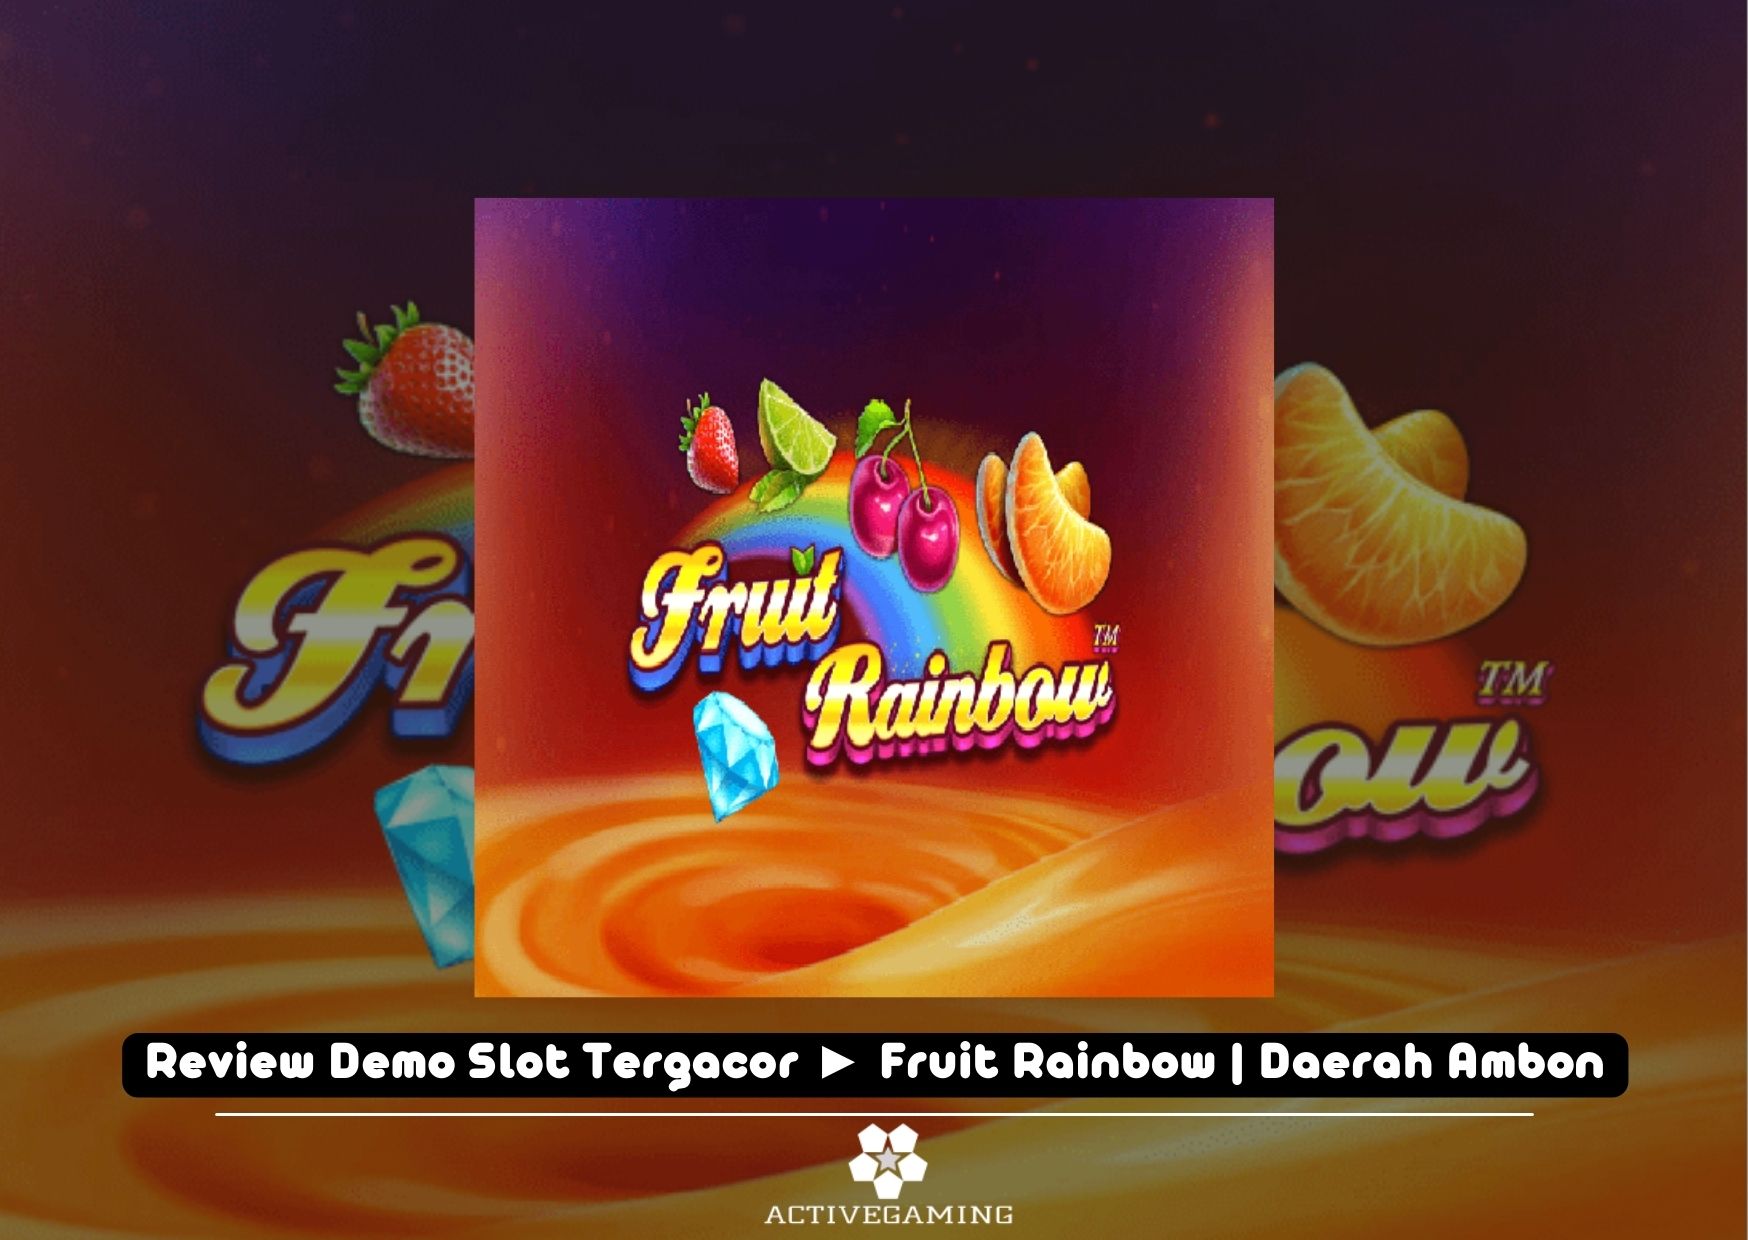 Review Demo Slot Tergacor ► Fruit Rainbow | Daerah Ambon